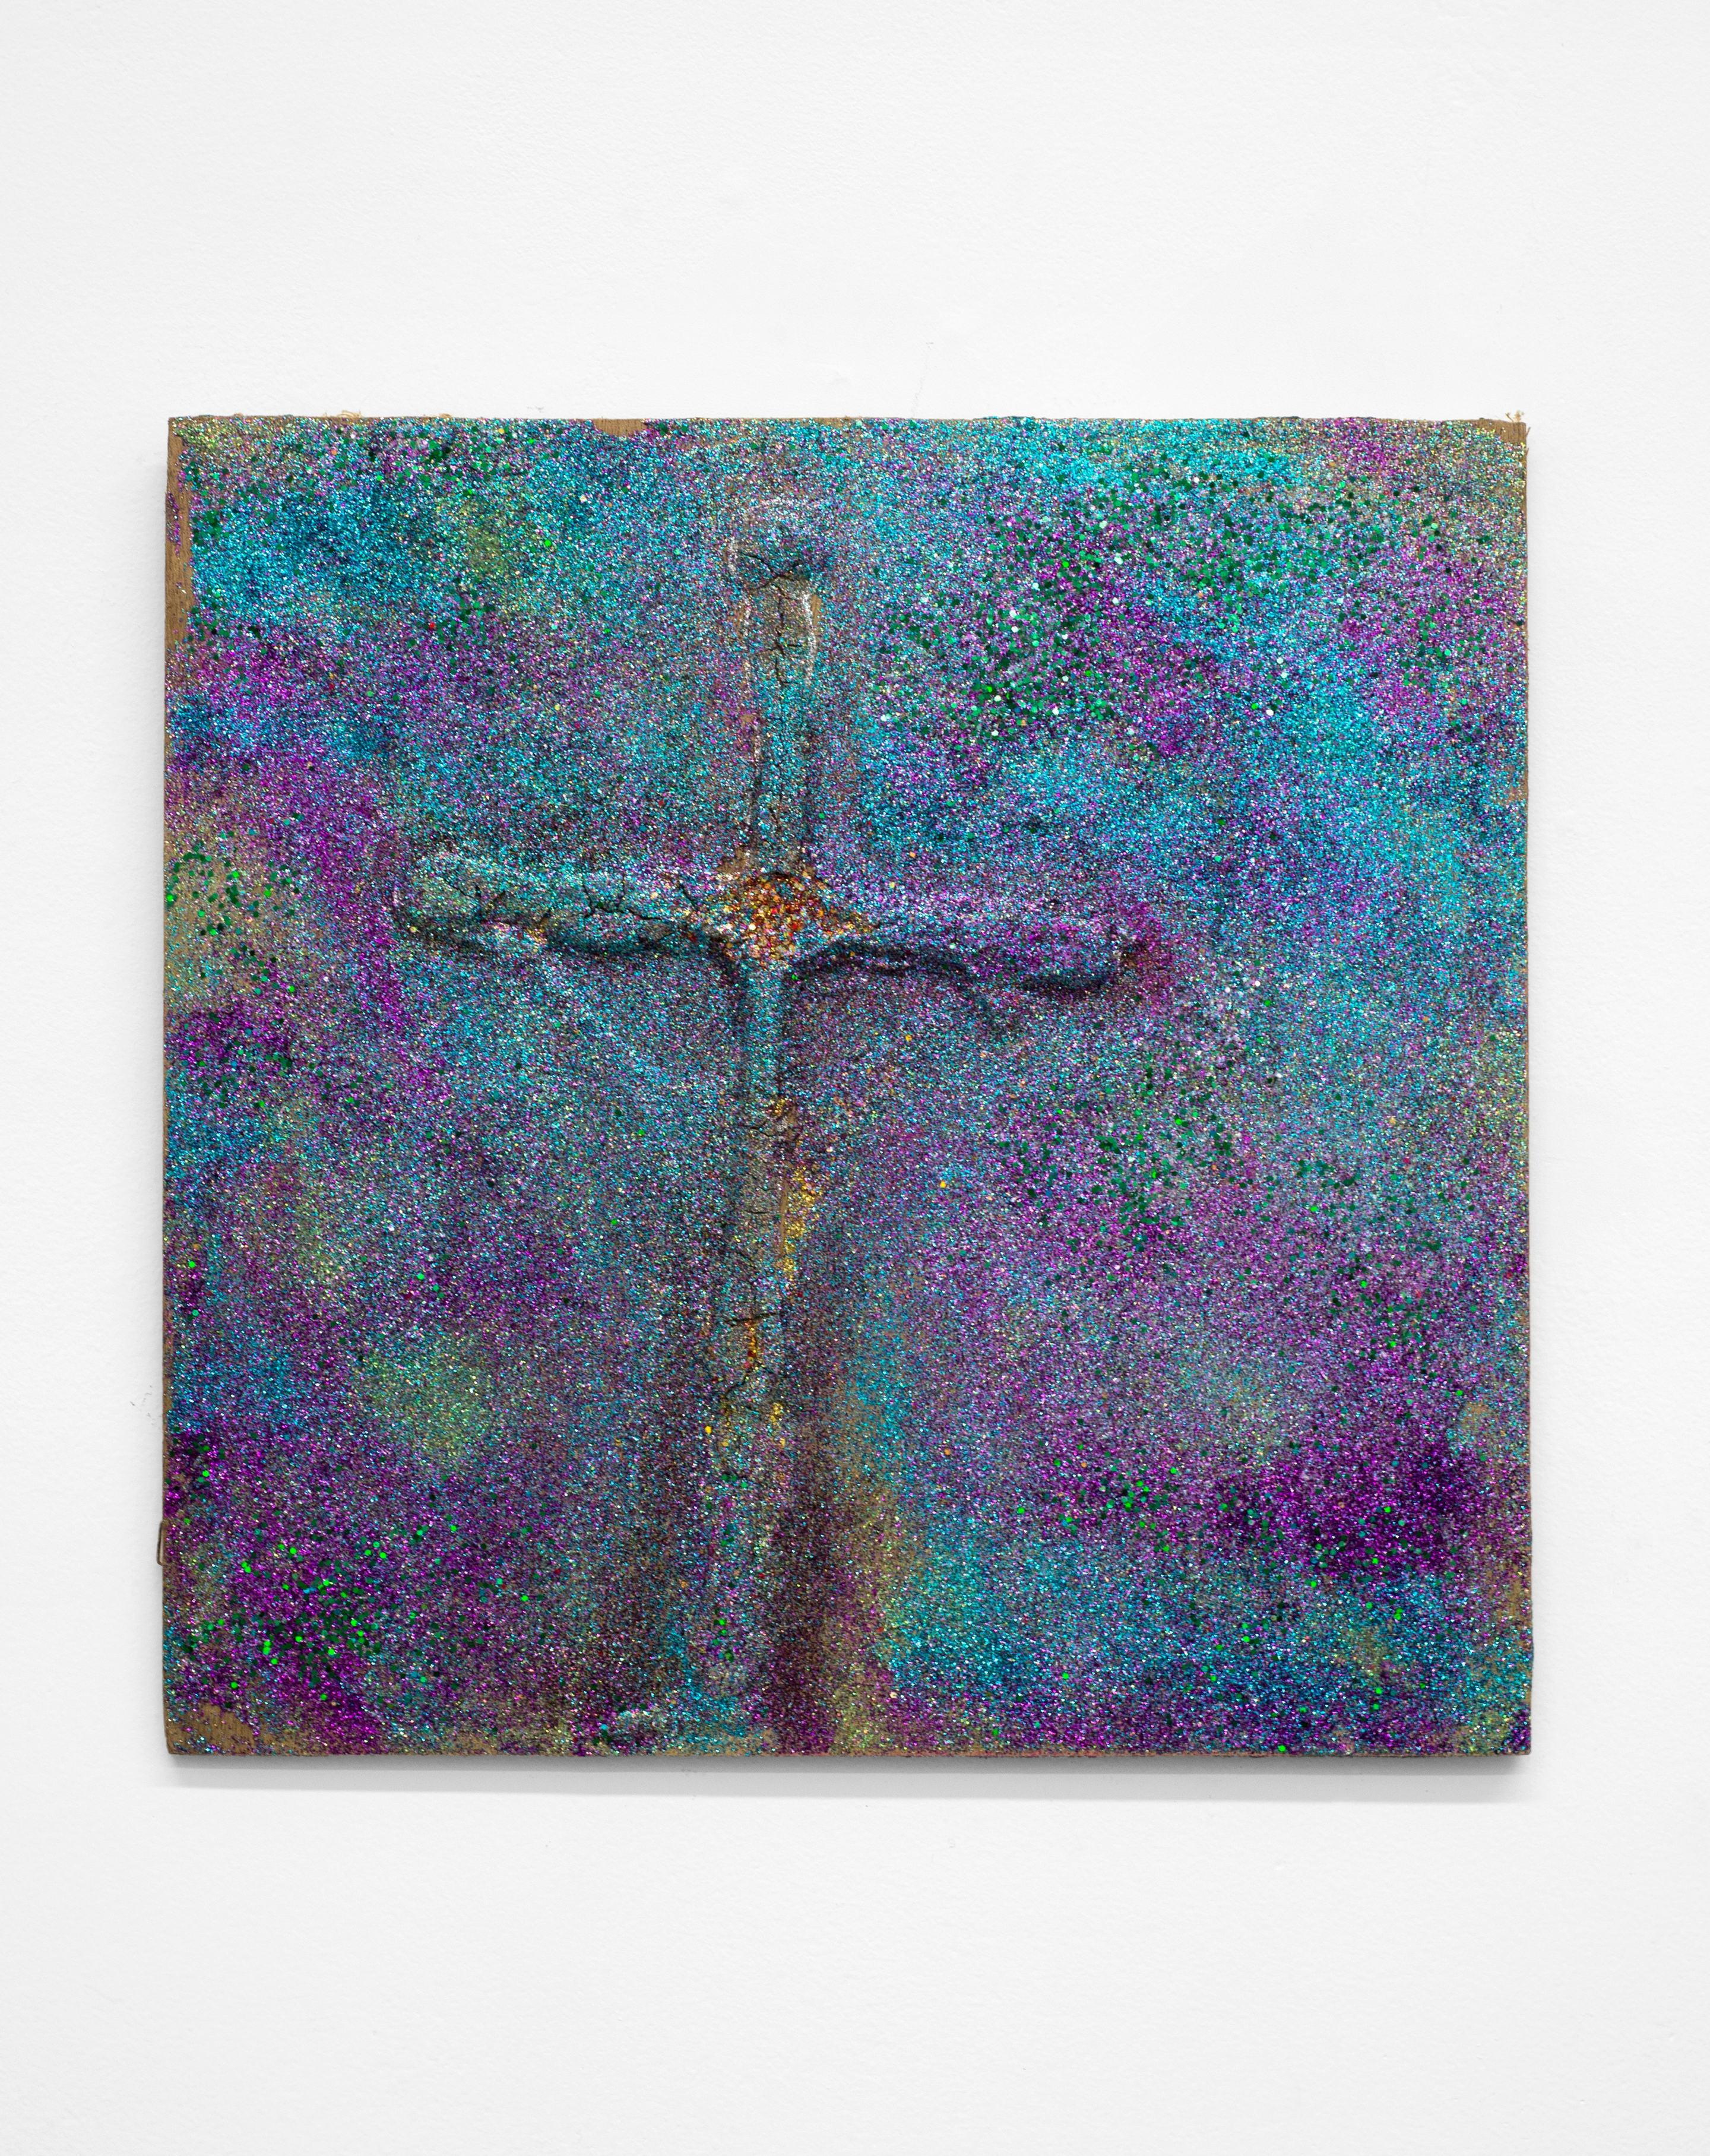 Cédric Fargues – Crucifixion (2019). Glue and glitter on board. 12h x 12w inches